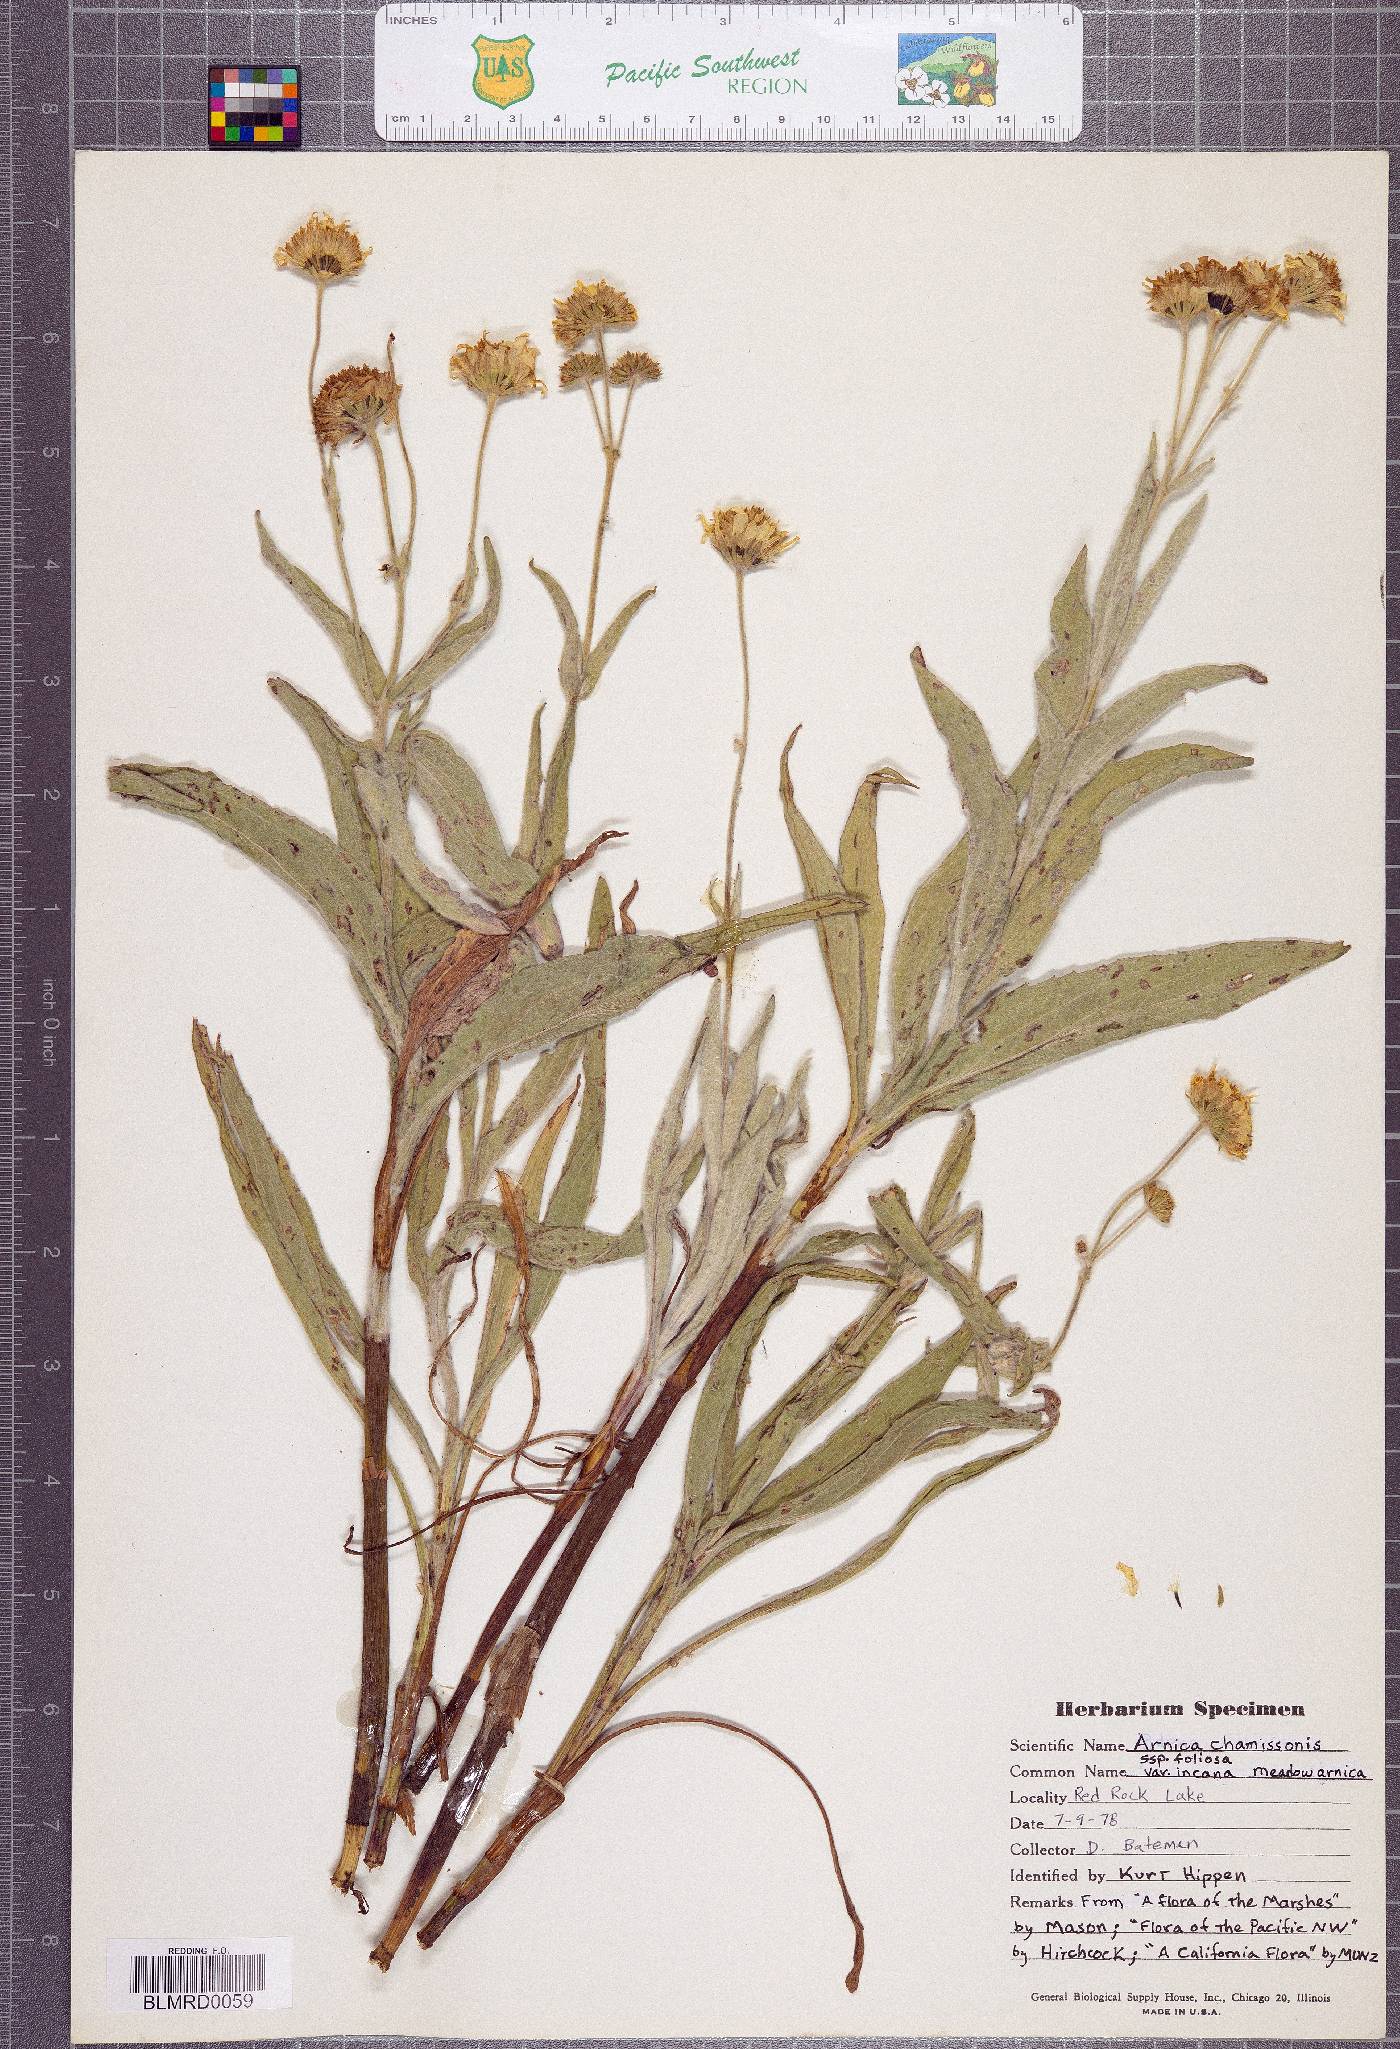 Arnica chamissonis subsp. foliosa image